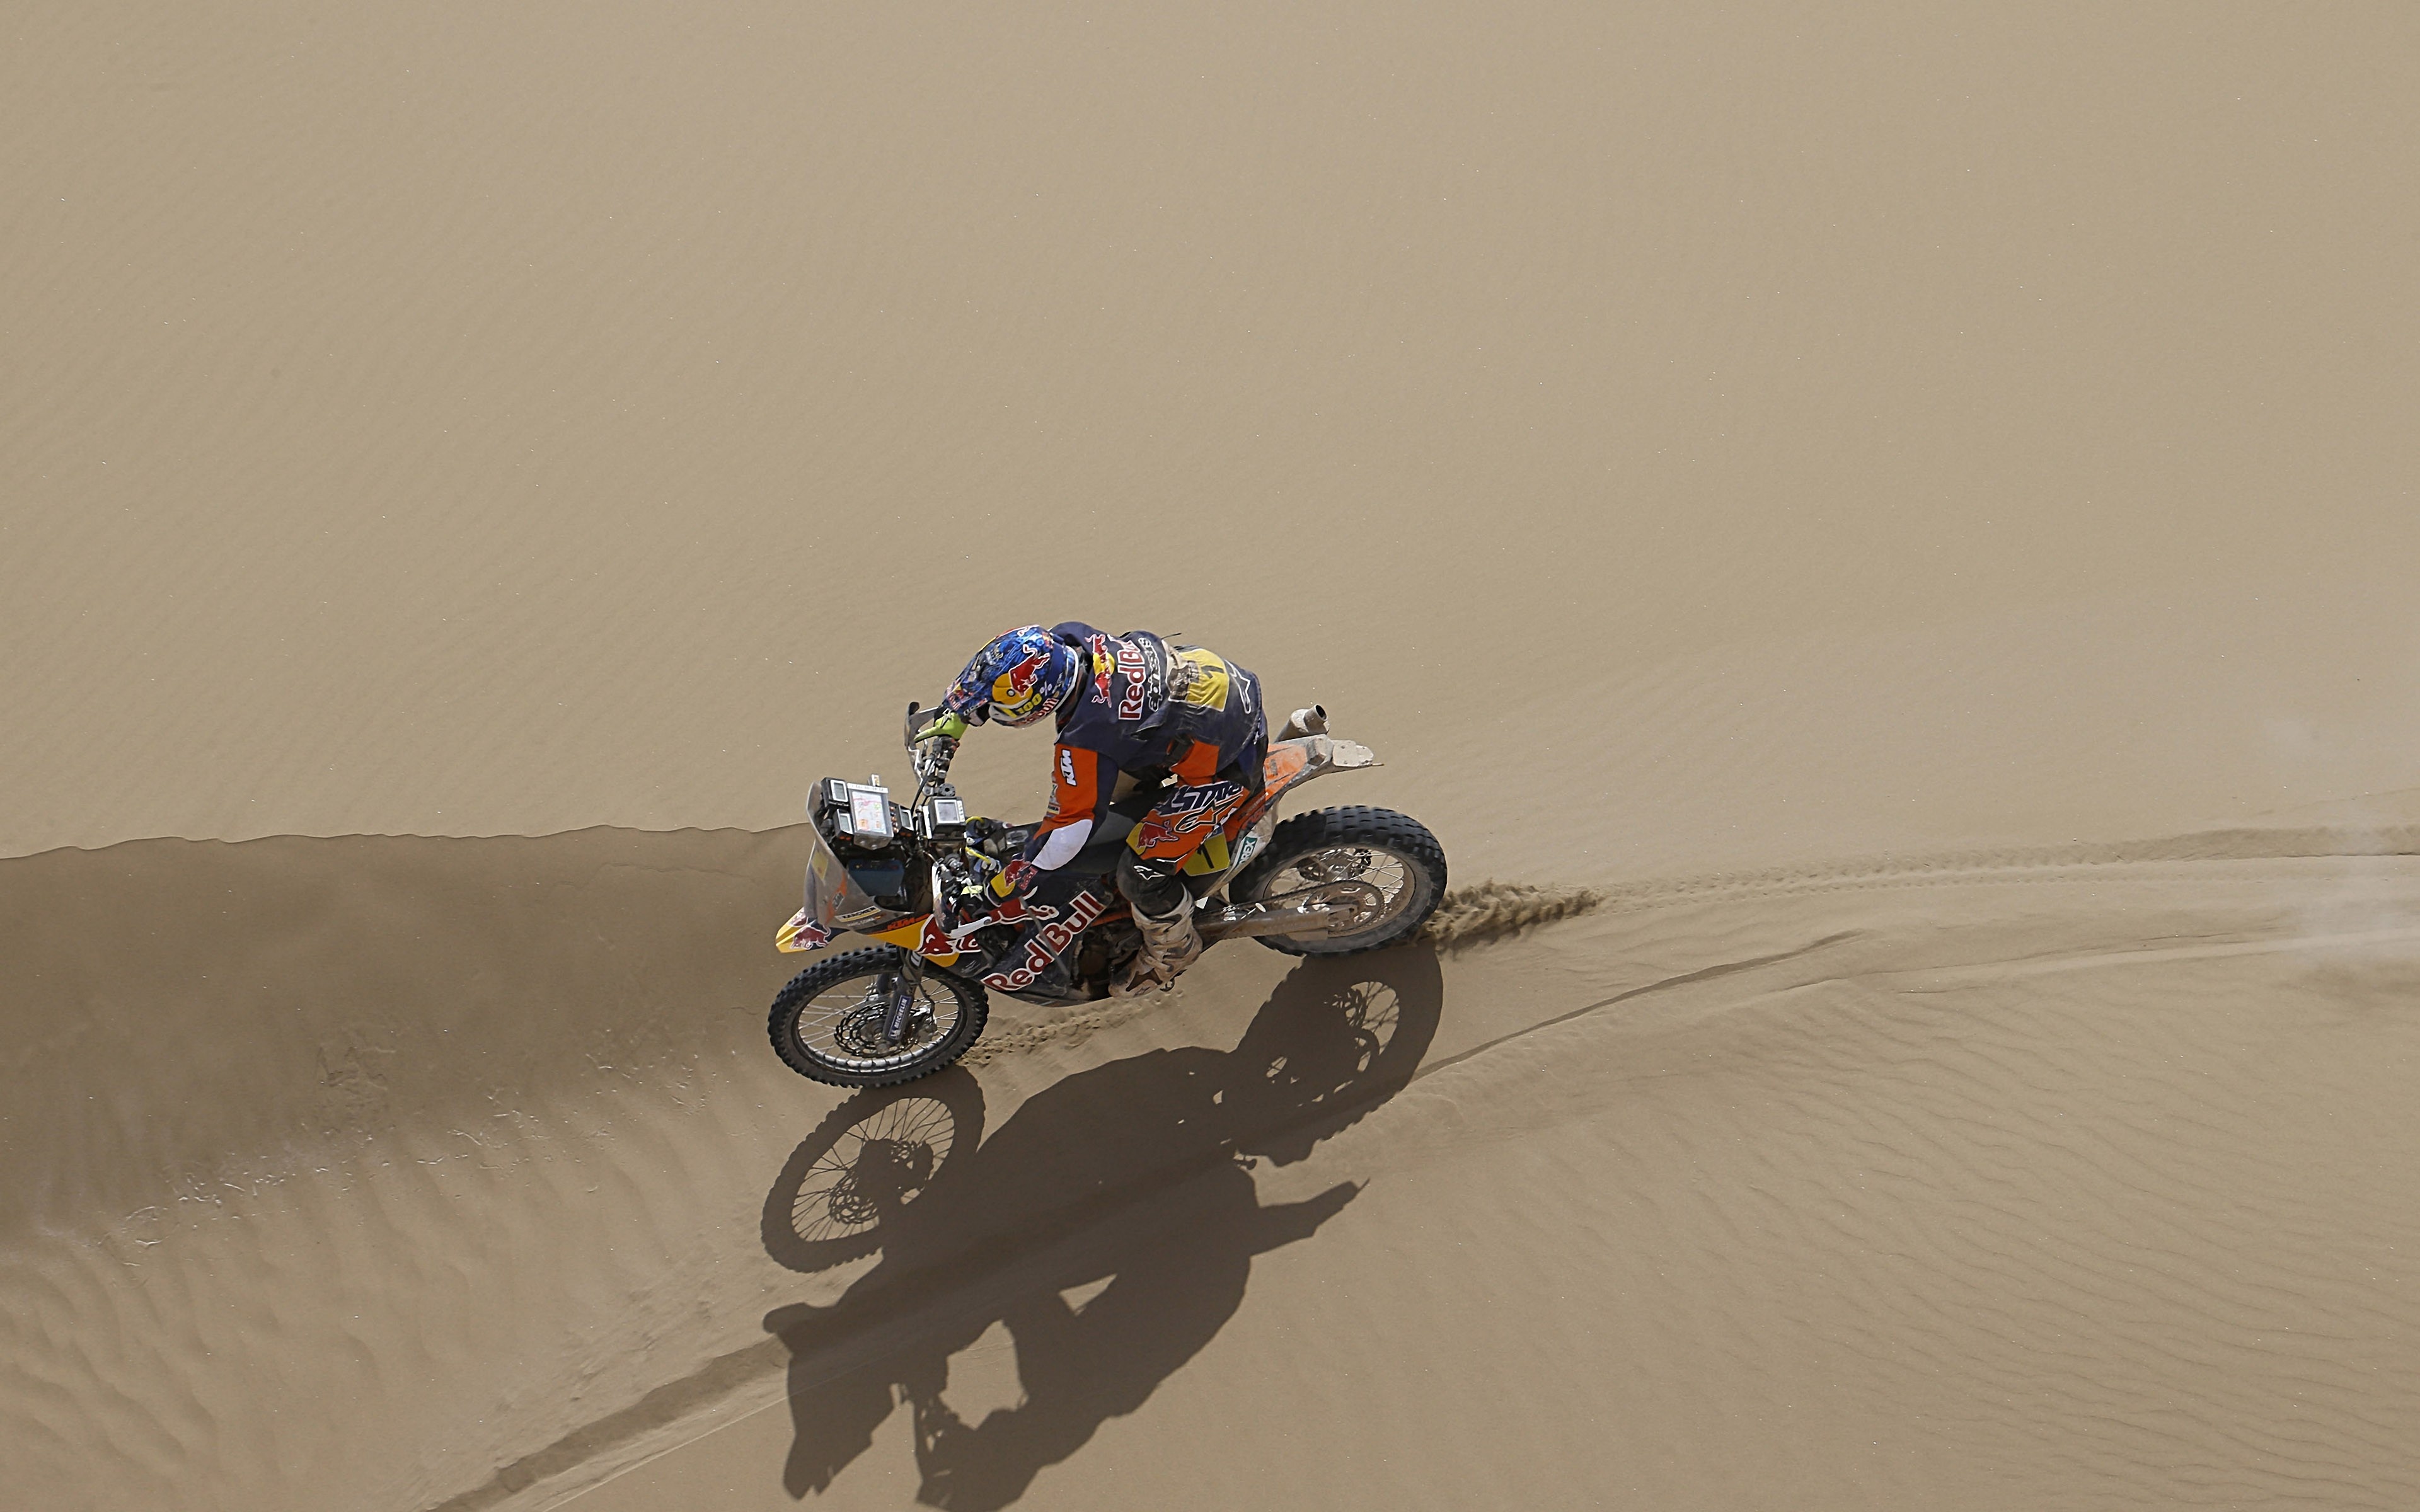 Marc Coma KTM 2015 DakarRally Winner